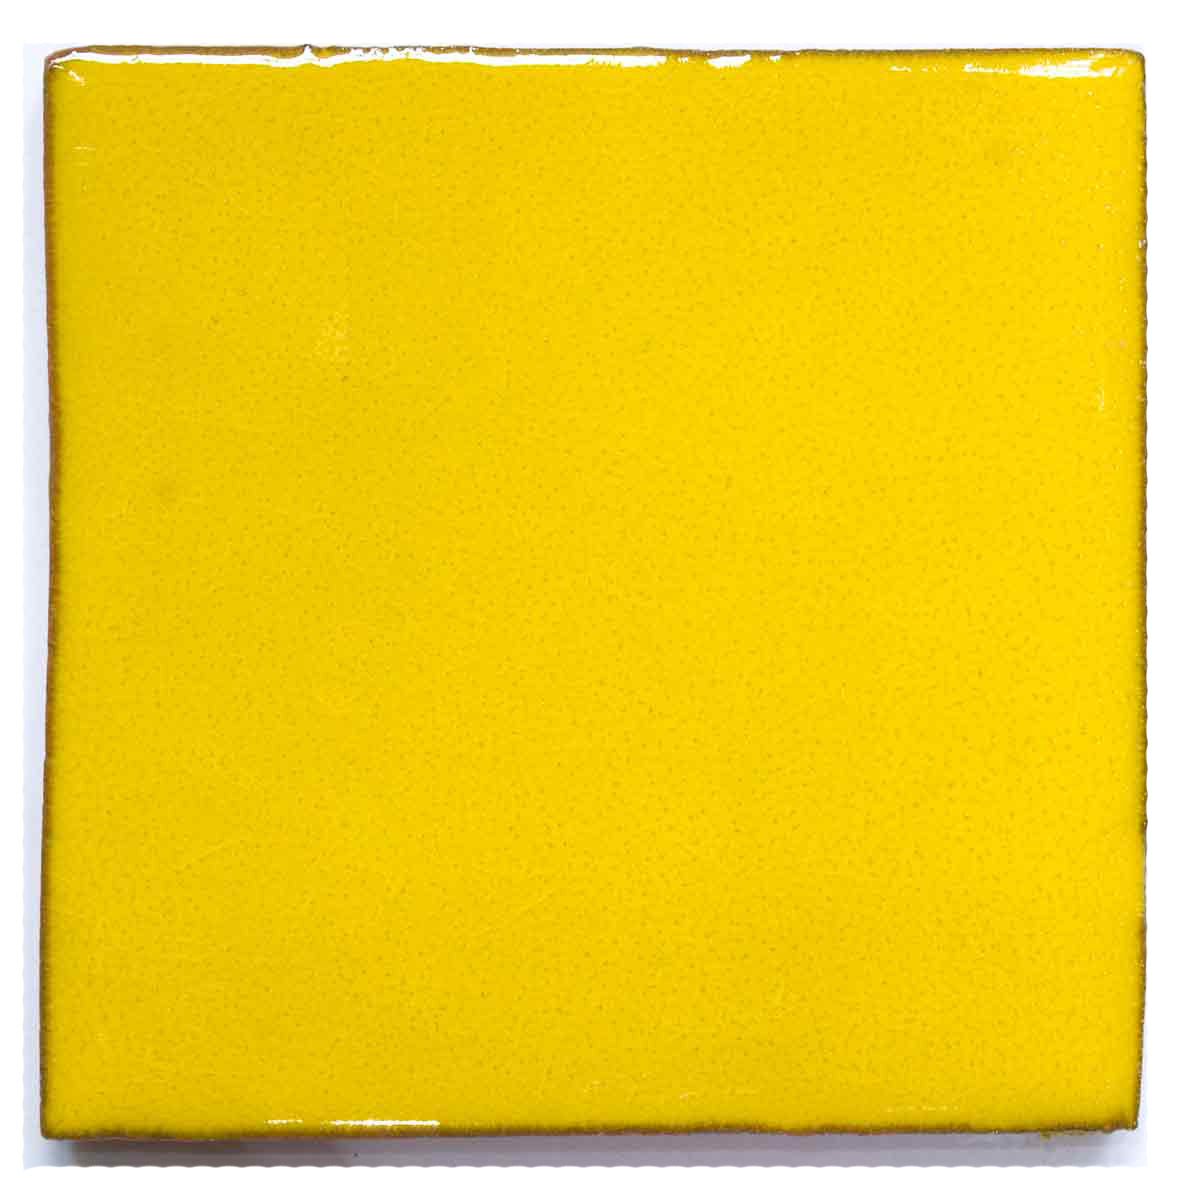  Intense yellow 10.5 x 10.5cm